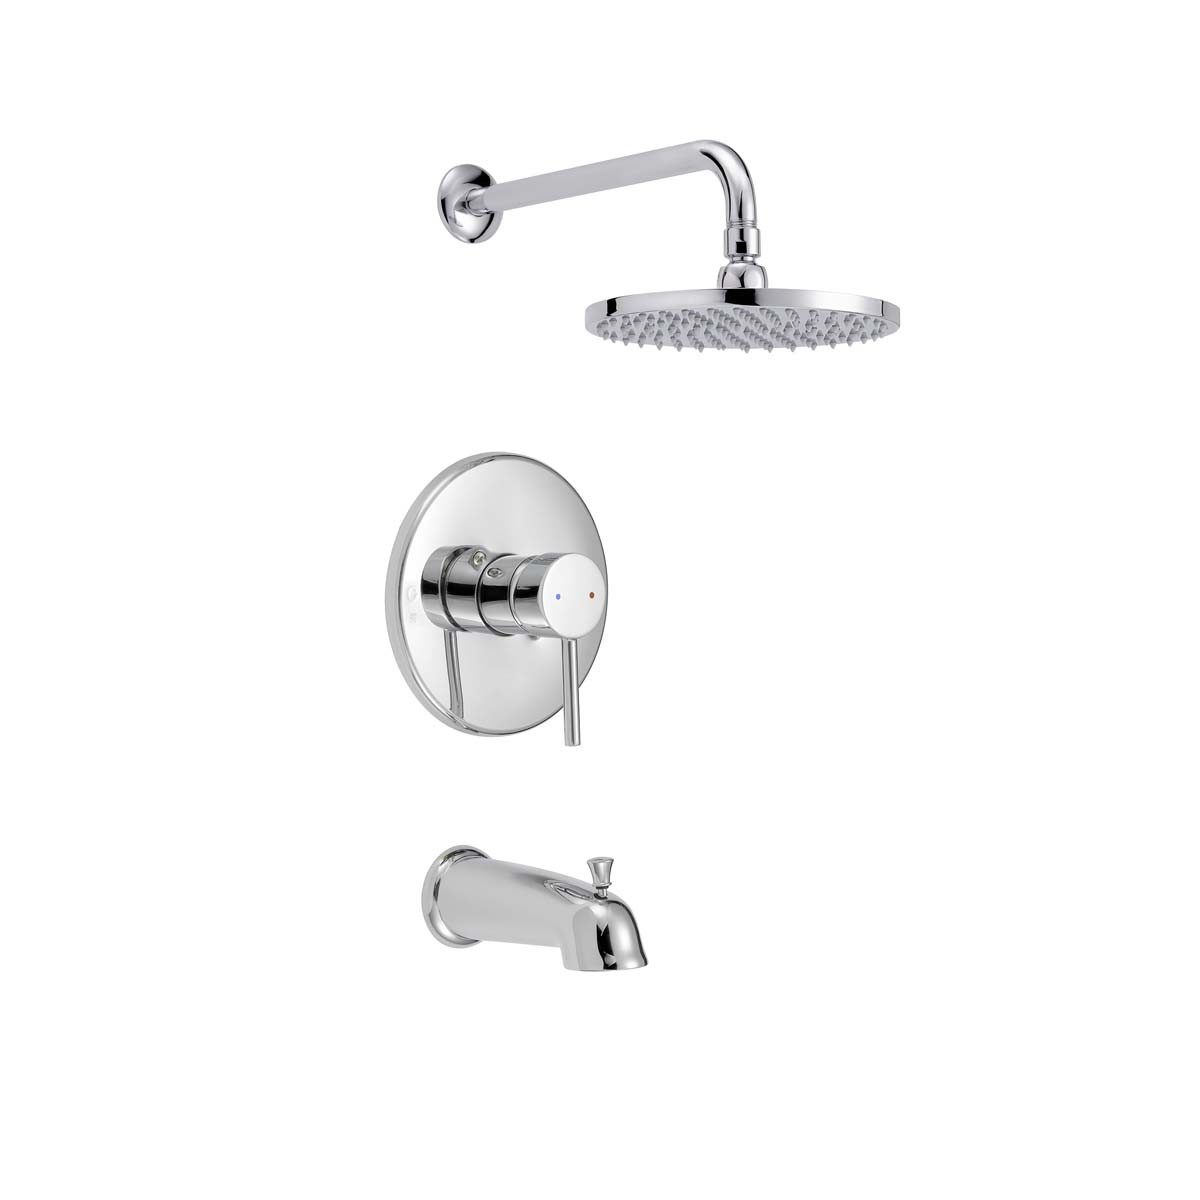 Solea Evoke Square Bathtub And Shower Faucet Set With Single Lever Handle Chrome